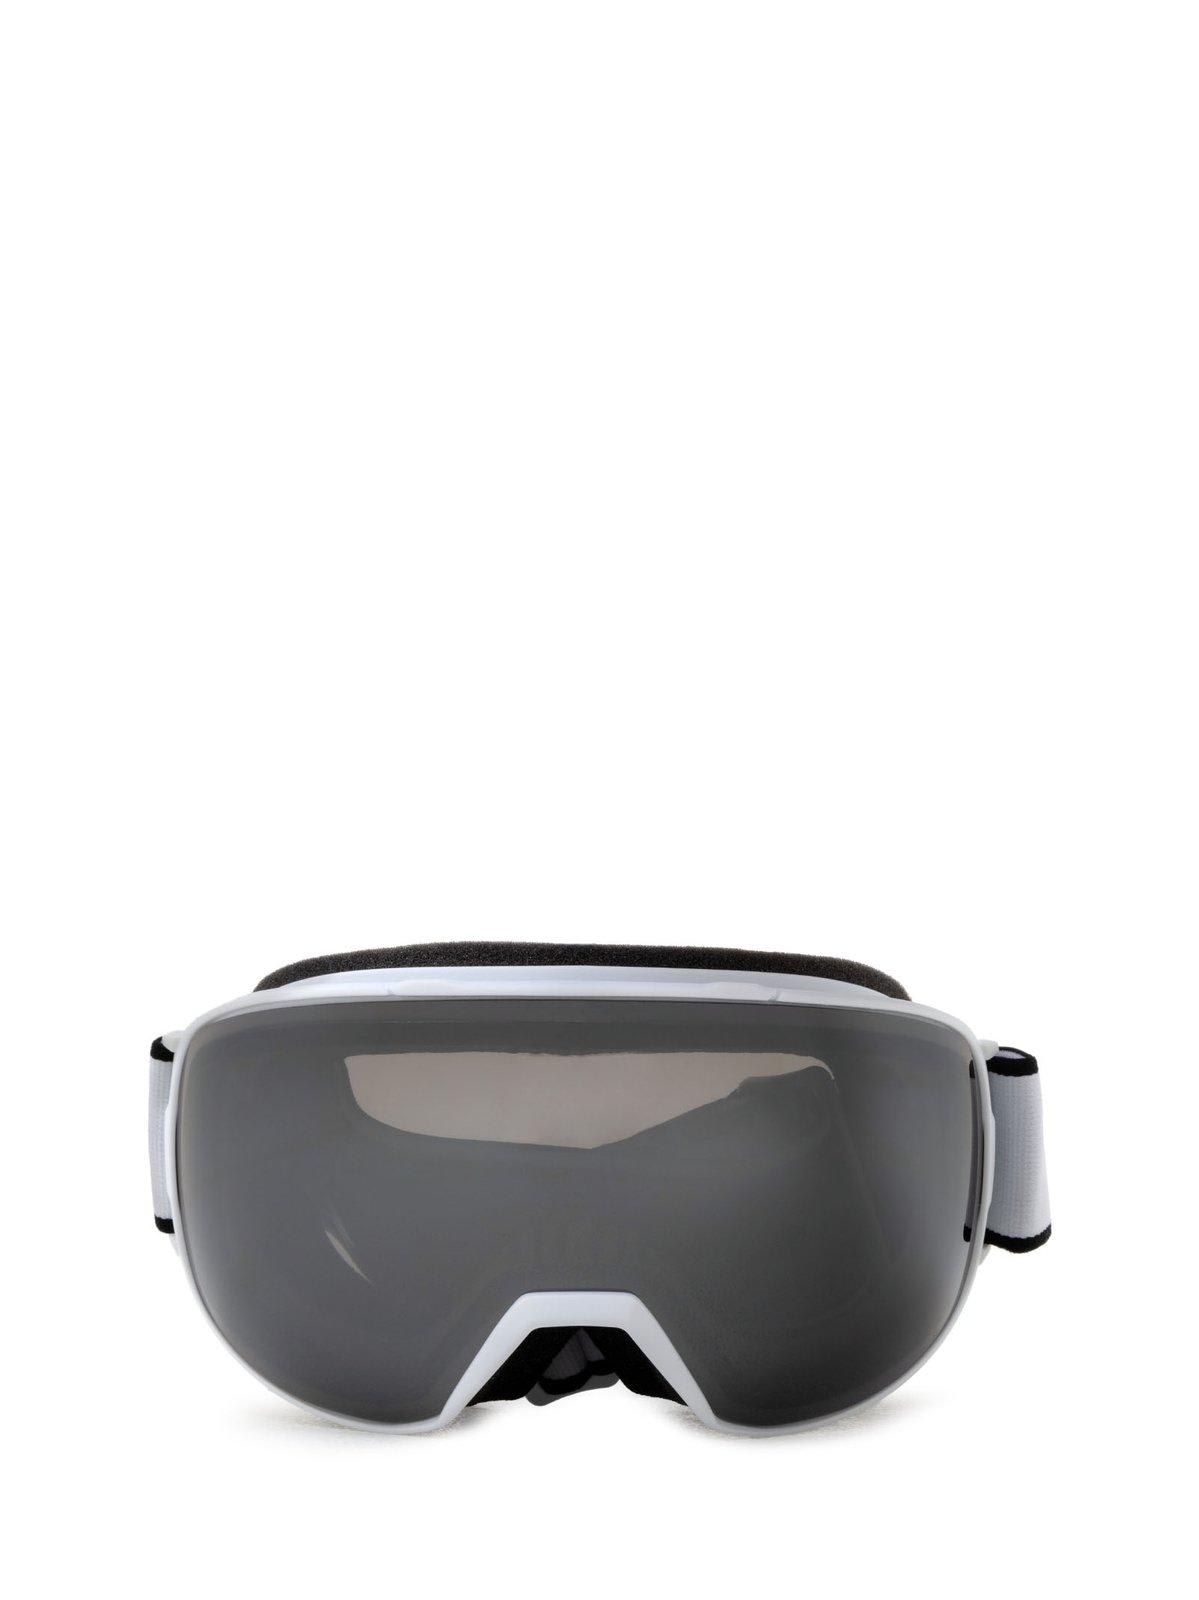 Mask Ski Goggle Mask Sunglasses